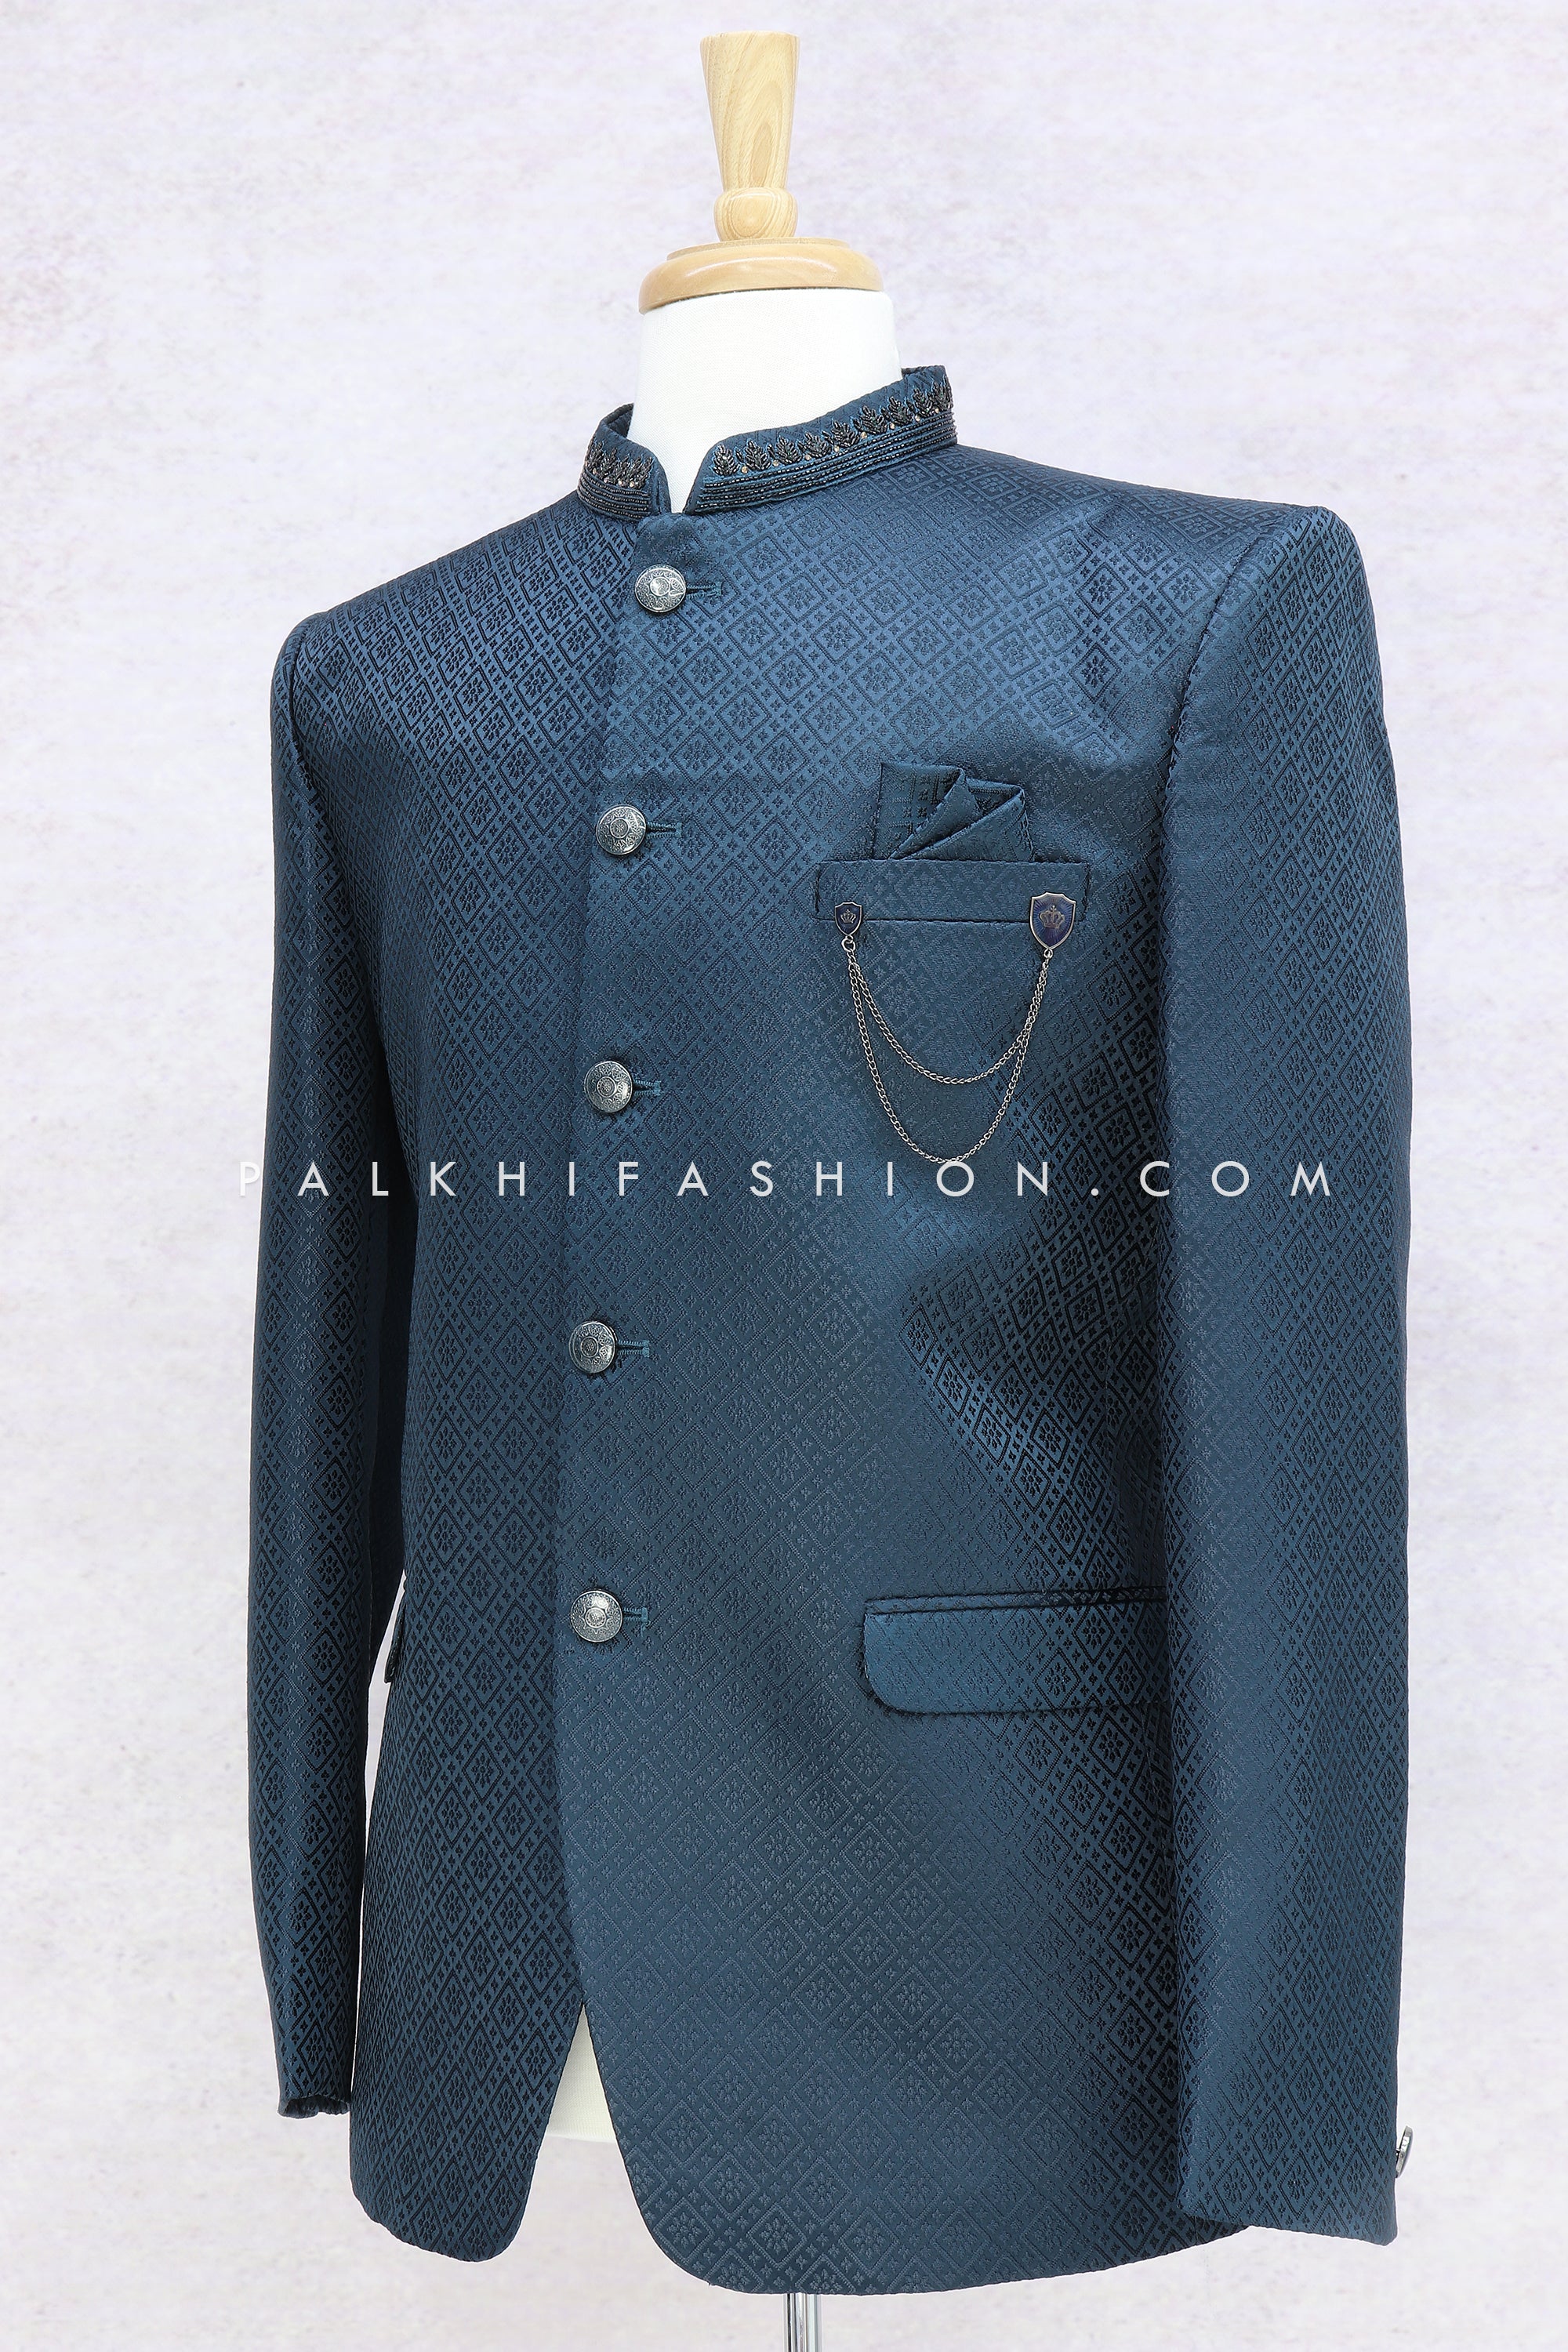 Black Designer Jodhpuri Suit for Groomjodhpurimens - Etsy | Dress suits for  men, Wedding kurta for men, Wedding suits men